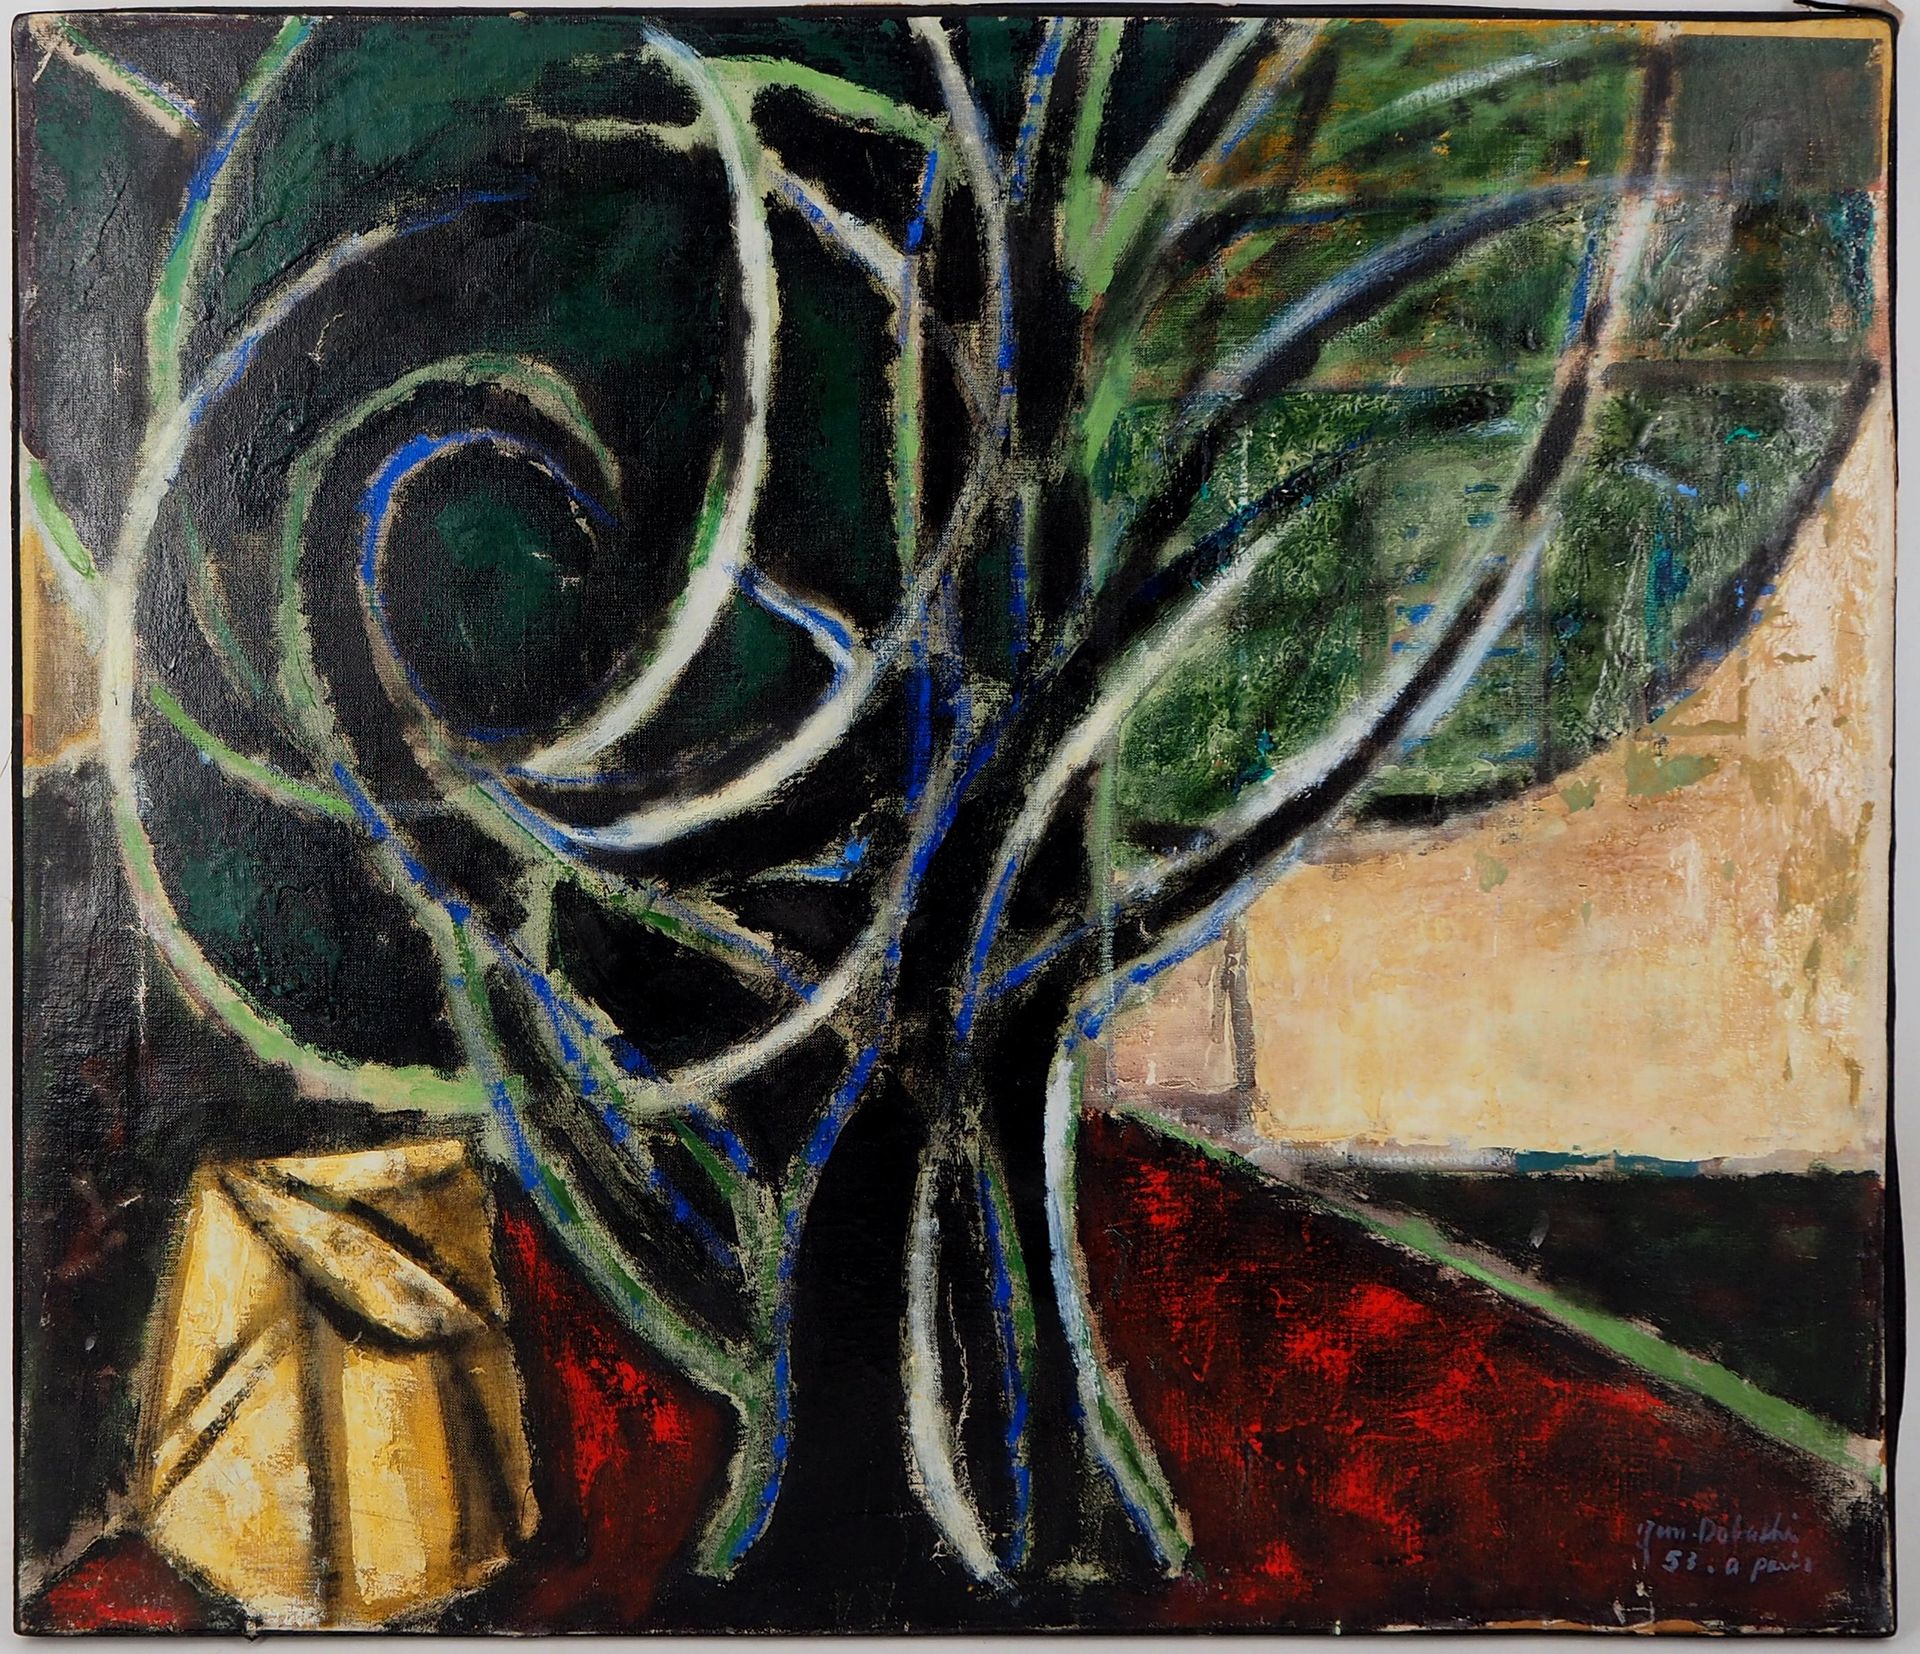 Jun DOBASHI Jun DOBASHI (1910-1975)

The tree of life, 1953

Oil on canvas

Sign&hellip;